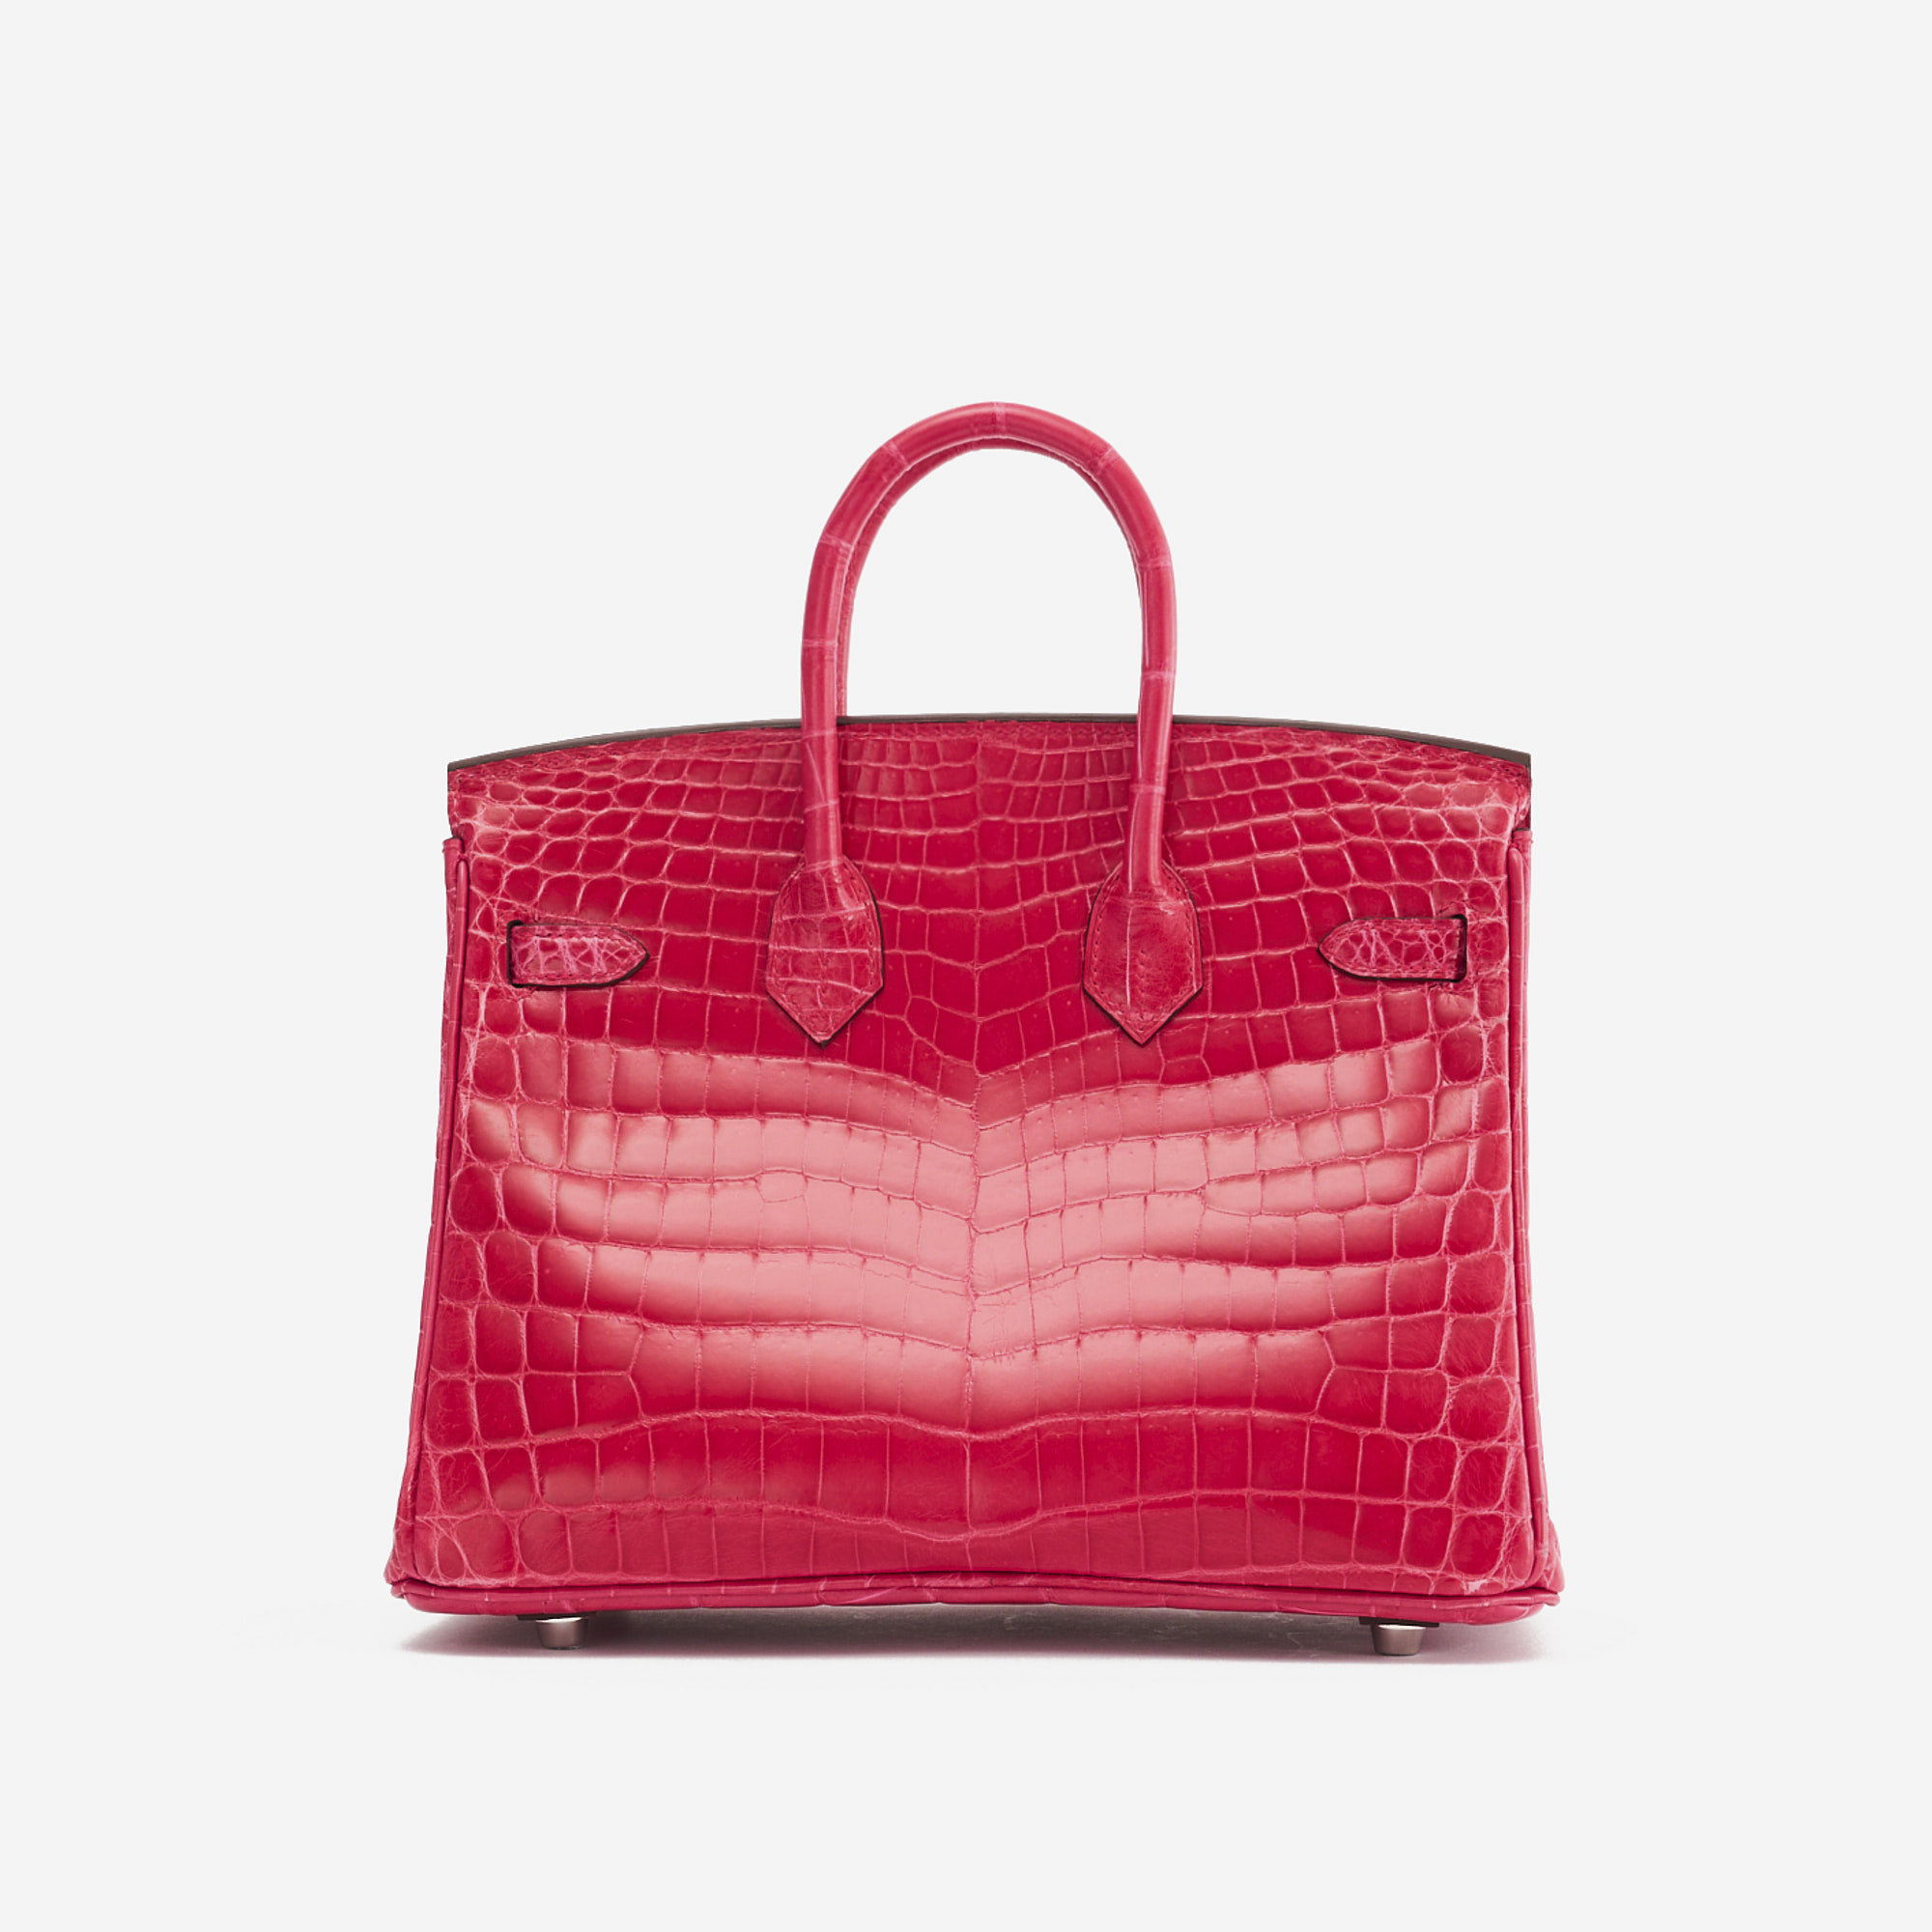 Kylie Jenner carries her favorite rare Hermes Birkin handbag made from  crocodile skin worth $150K